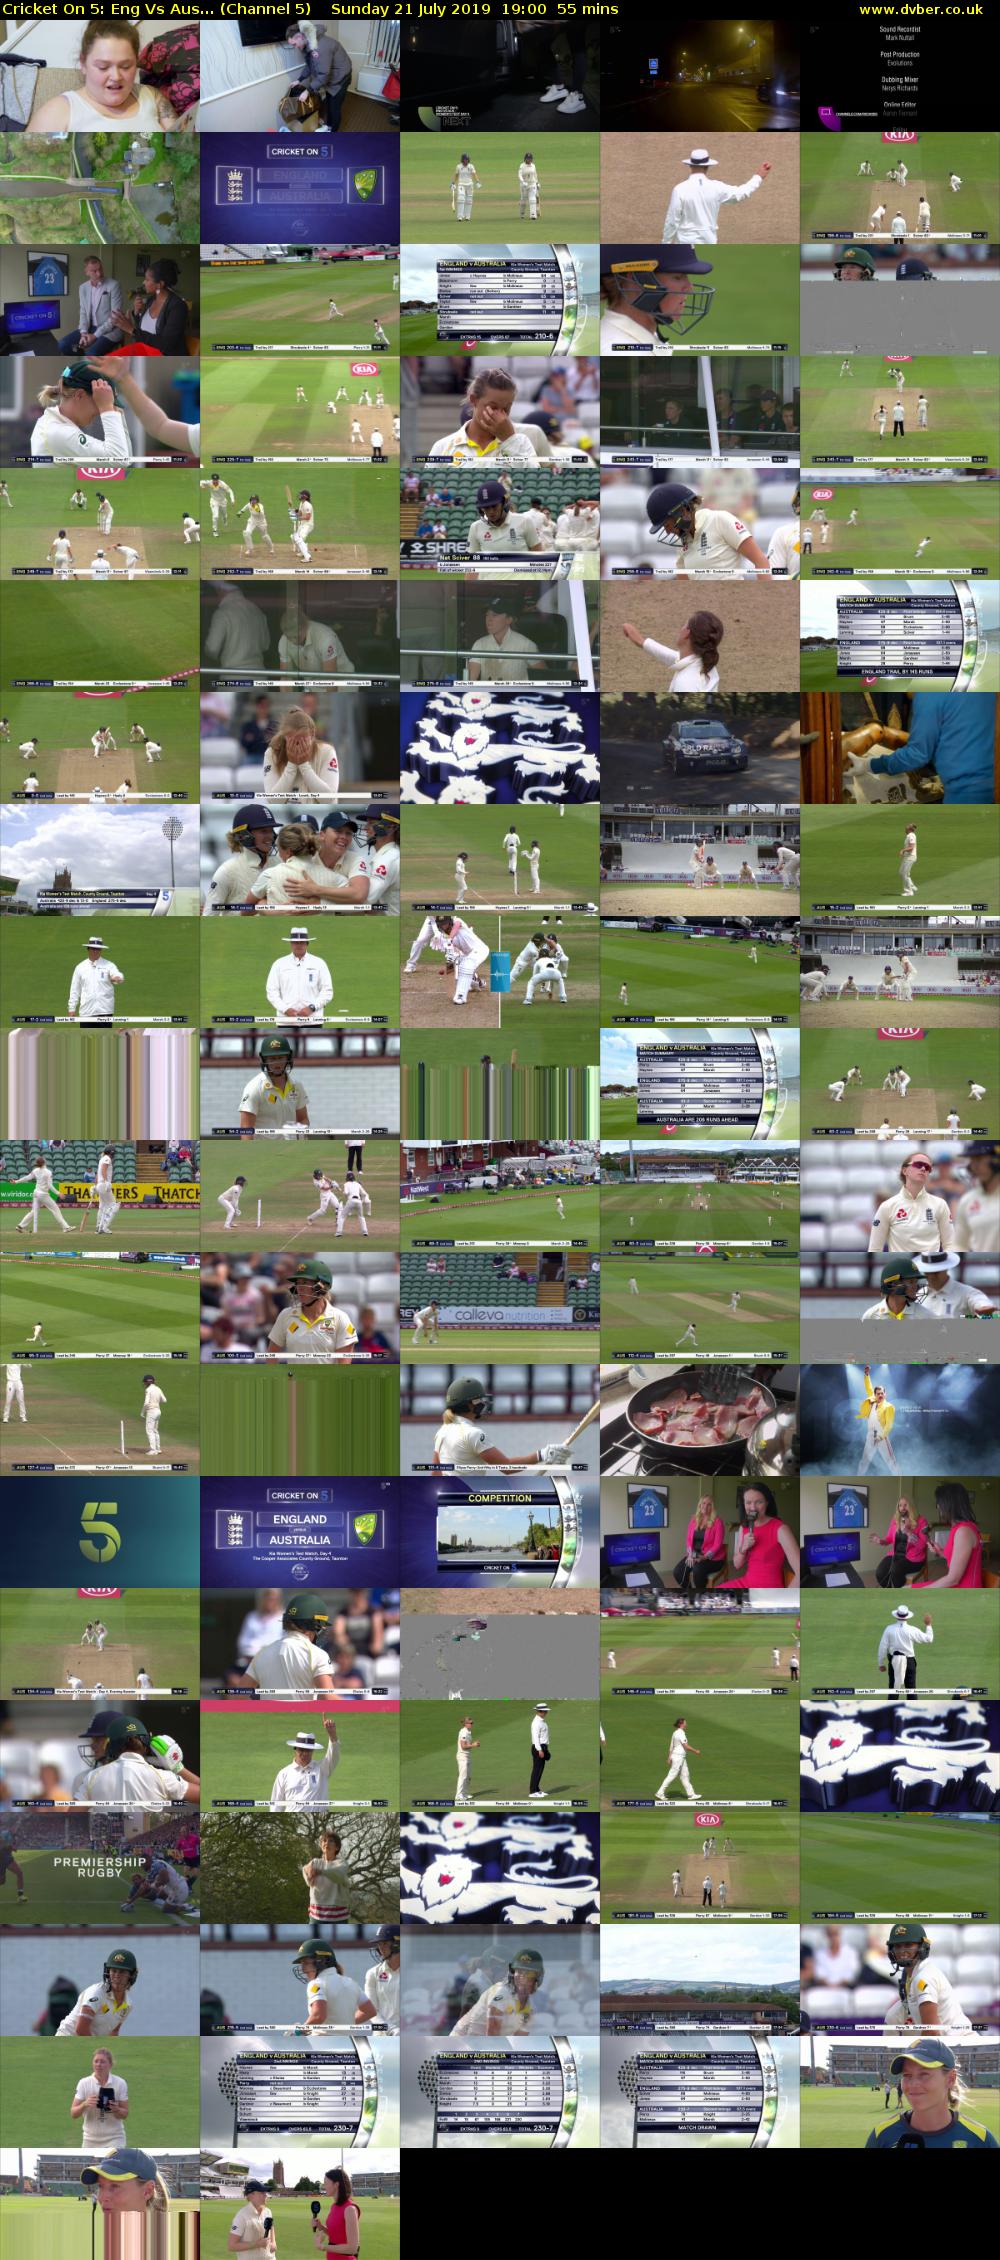 Cricket On 5: Eng Vs Aus... (Channel 5) Sunday 21 July 2019 19:00 - 19:55